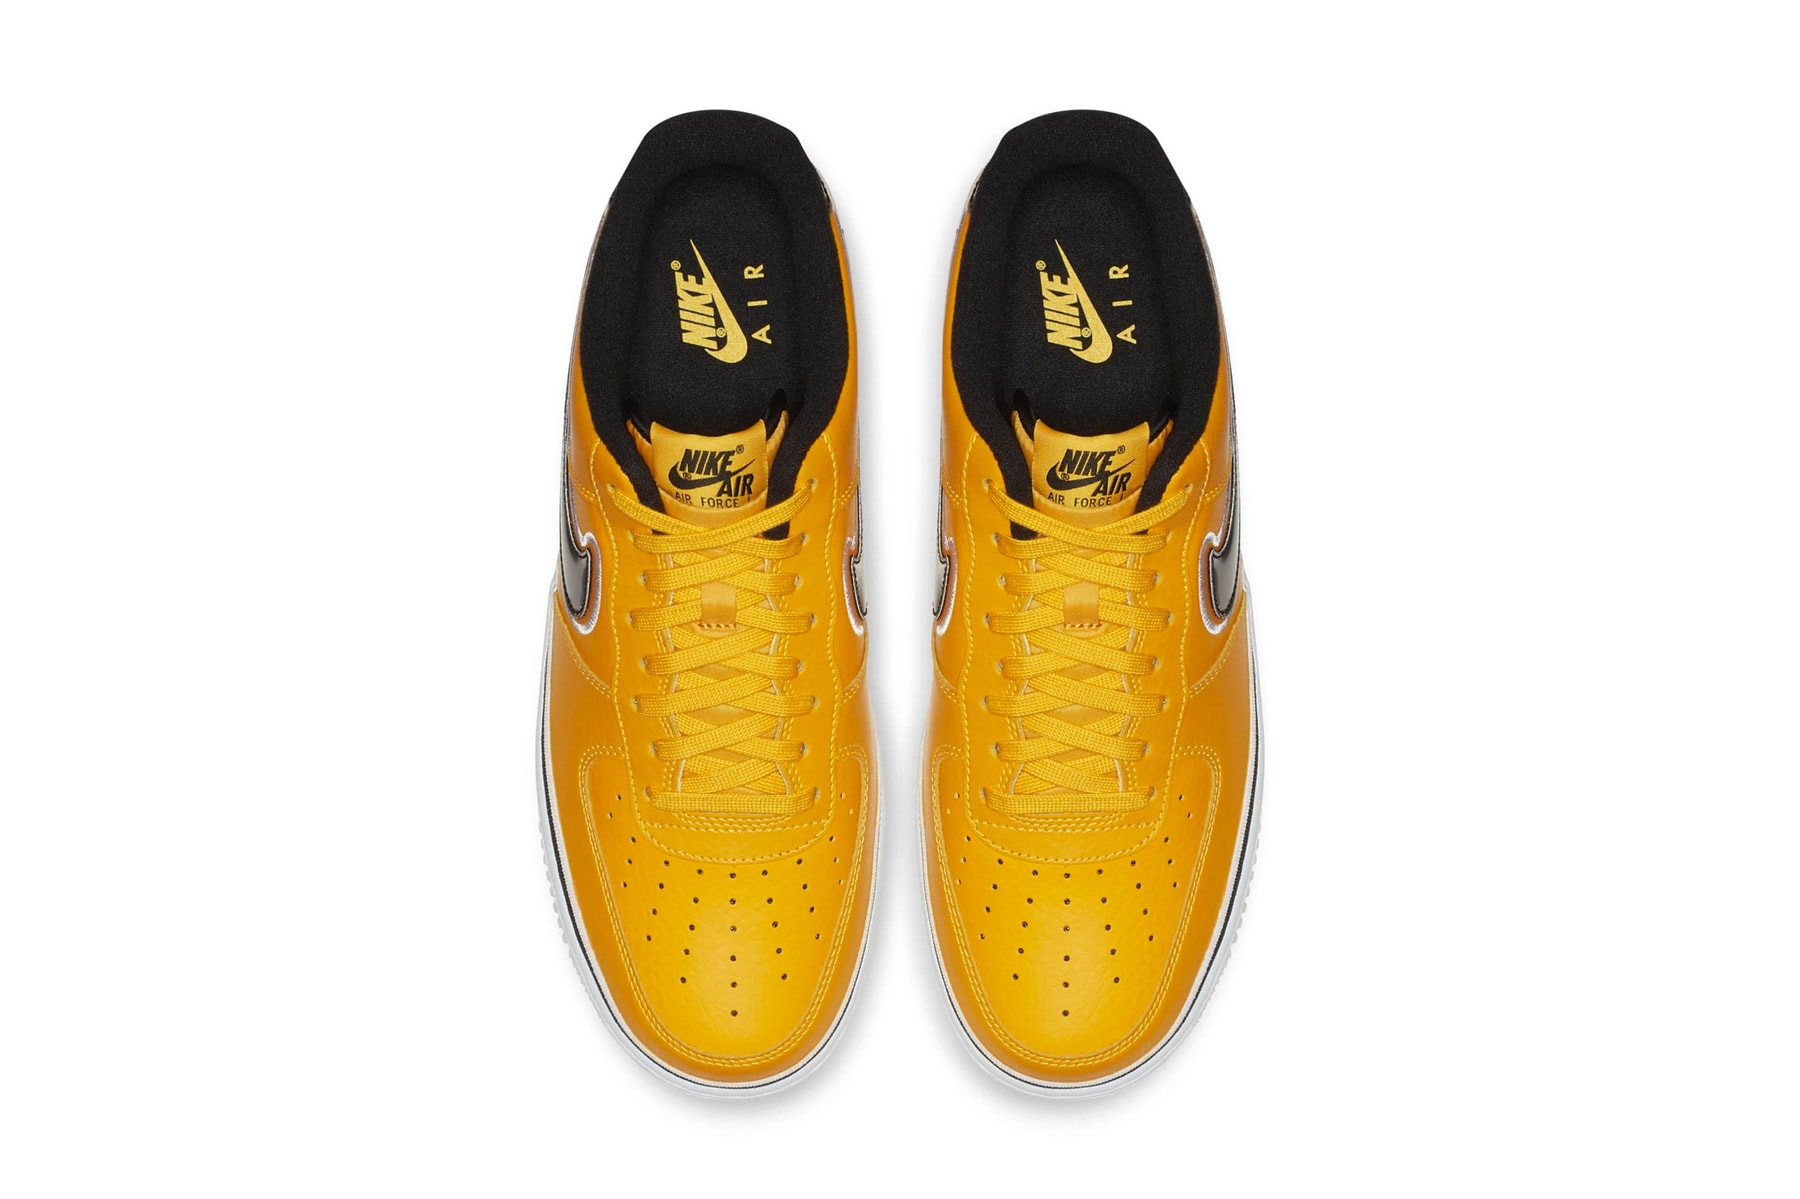 Nike Air Force 1 Low NBA Los Angeles Lakers LA colorway yellow black colorway sneaker release date info price details basketball team colors